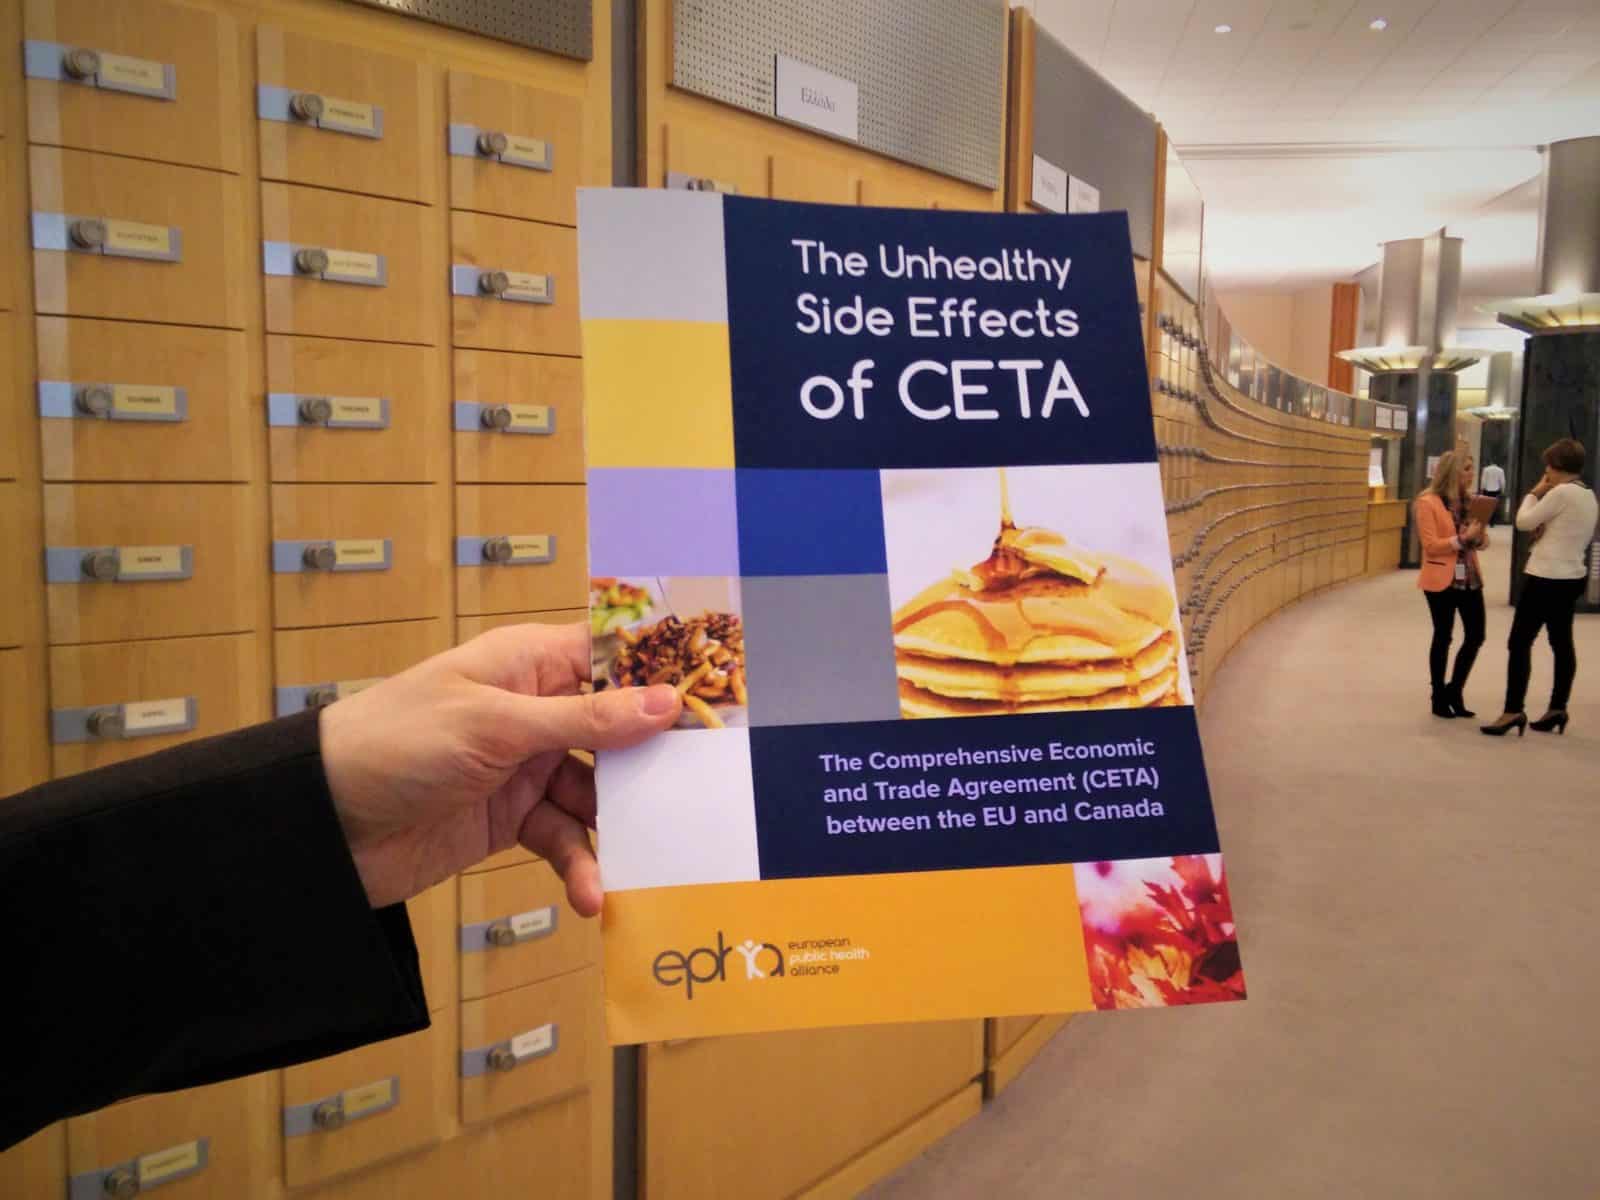 Members of the European Parliament Responsible for Health should reject CETA